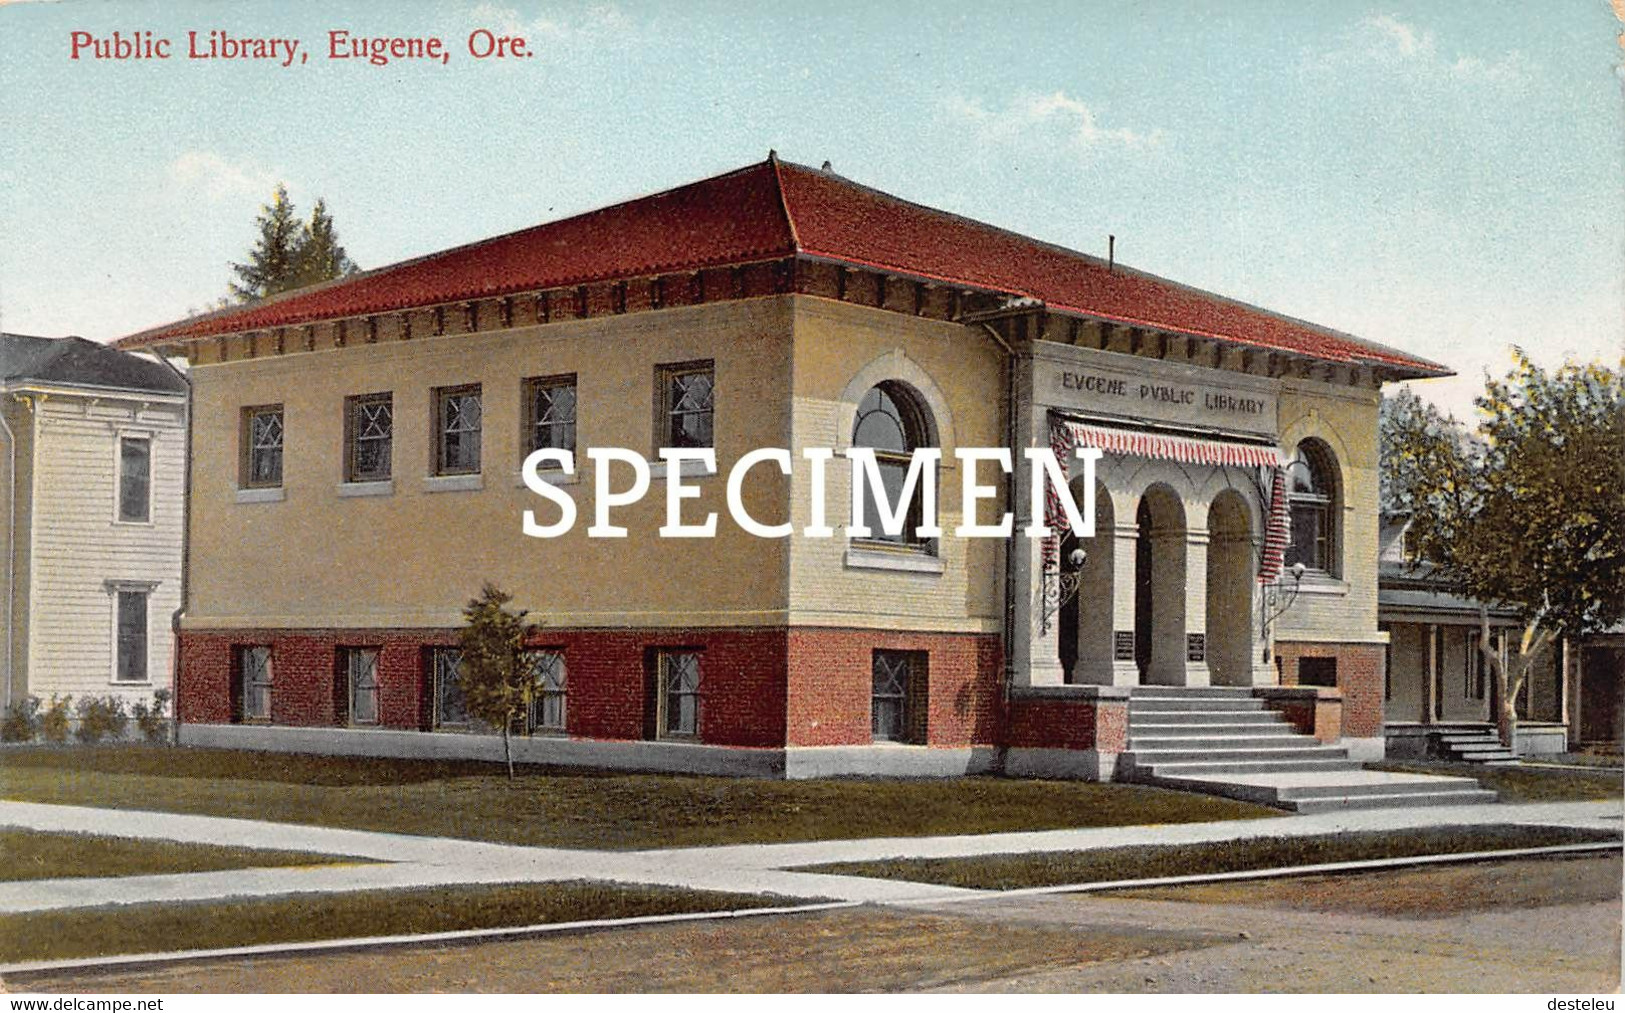 Public Library - Eugene - Eugene